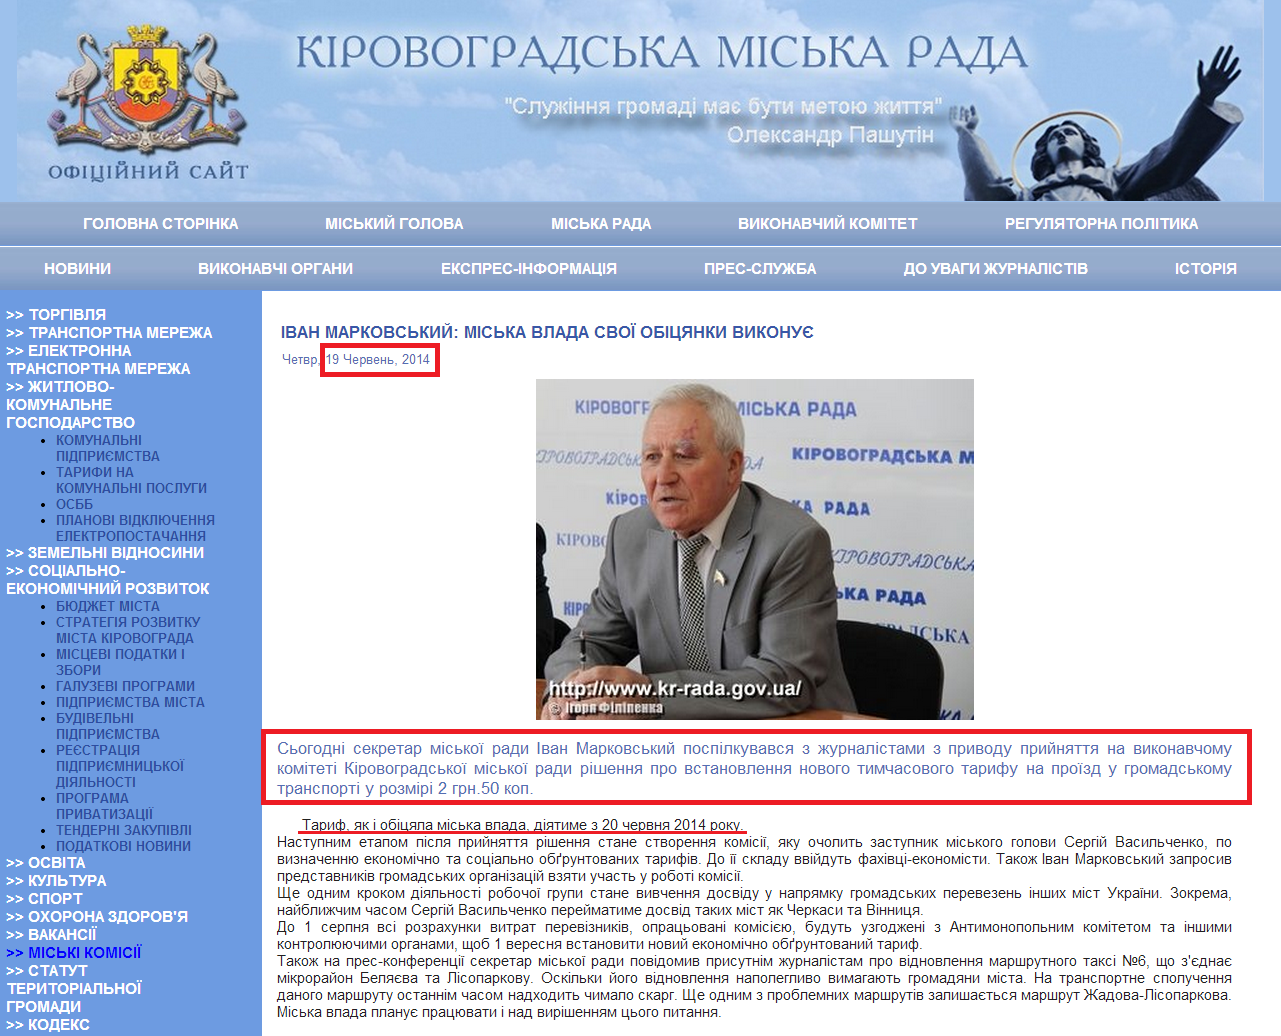 http://www.kr-rada.gov.ua/news/ivan-markovskiy-miska-19614.html?page=9